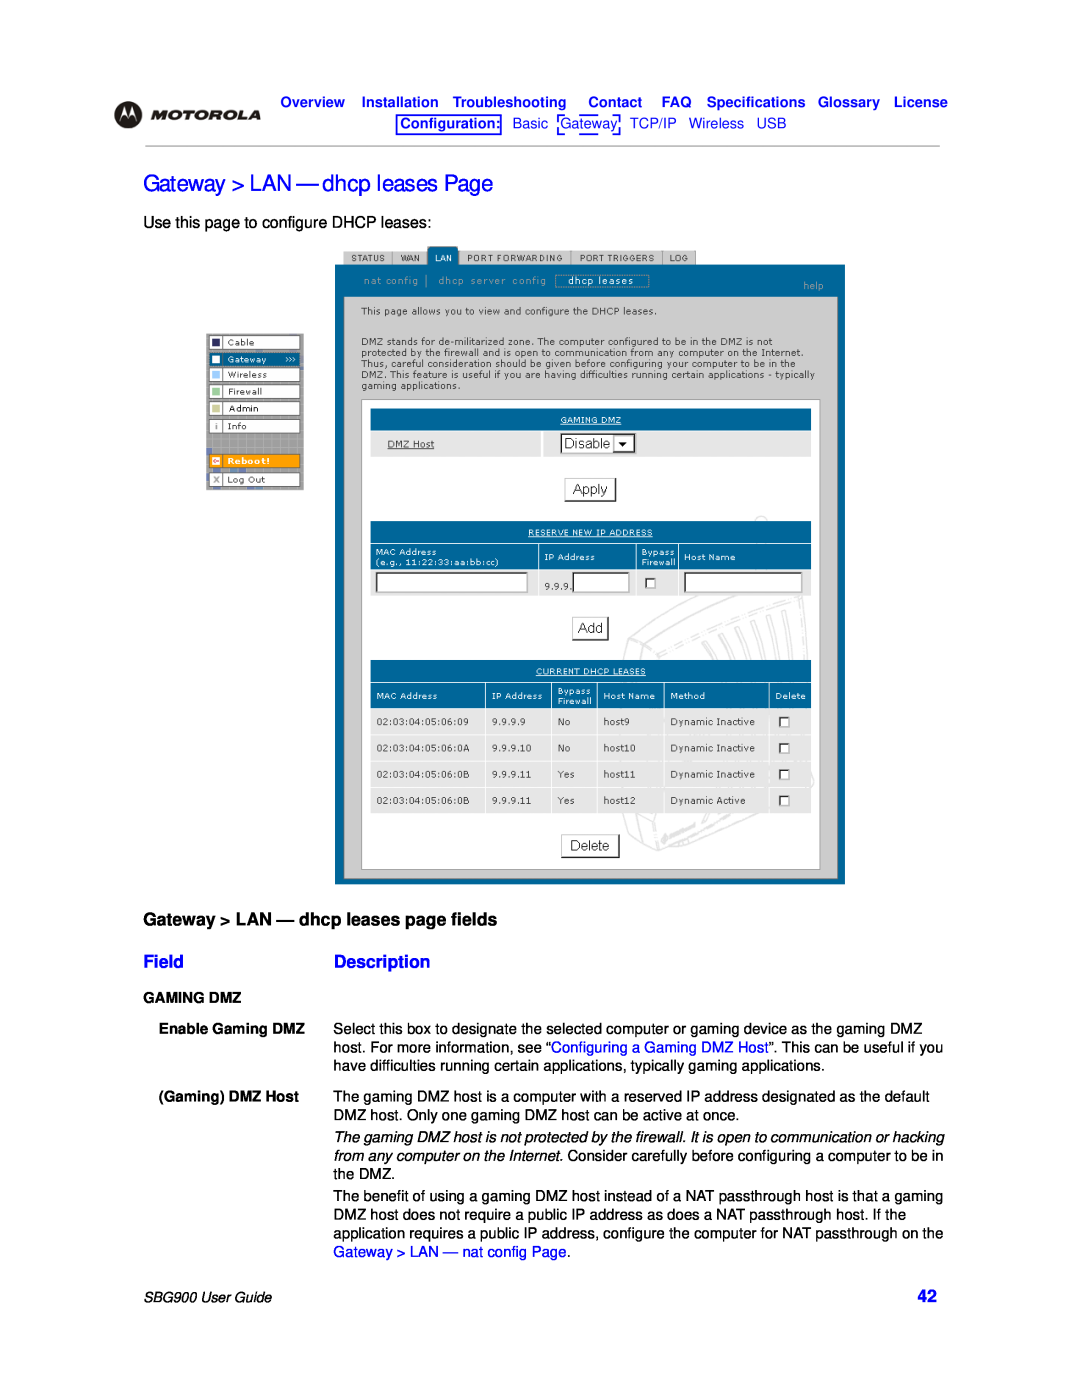 Motorola Gateway LAN - dhcp leases Page, Gateway LAN - dhcp leases page fields, FieldDescription, SBG900 User Guide 